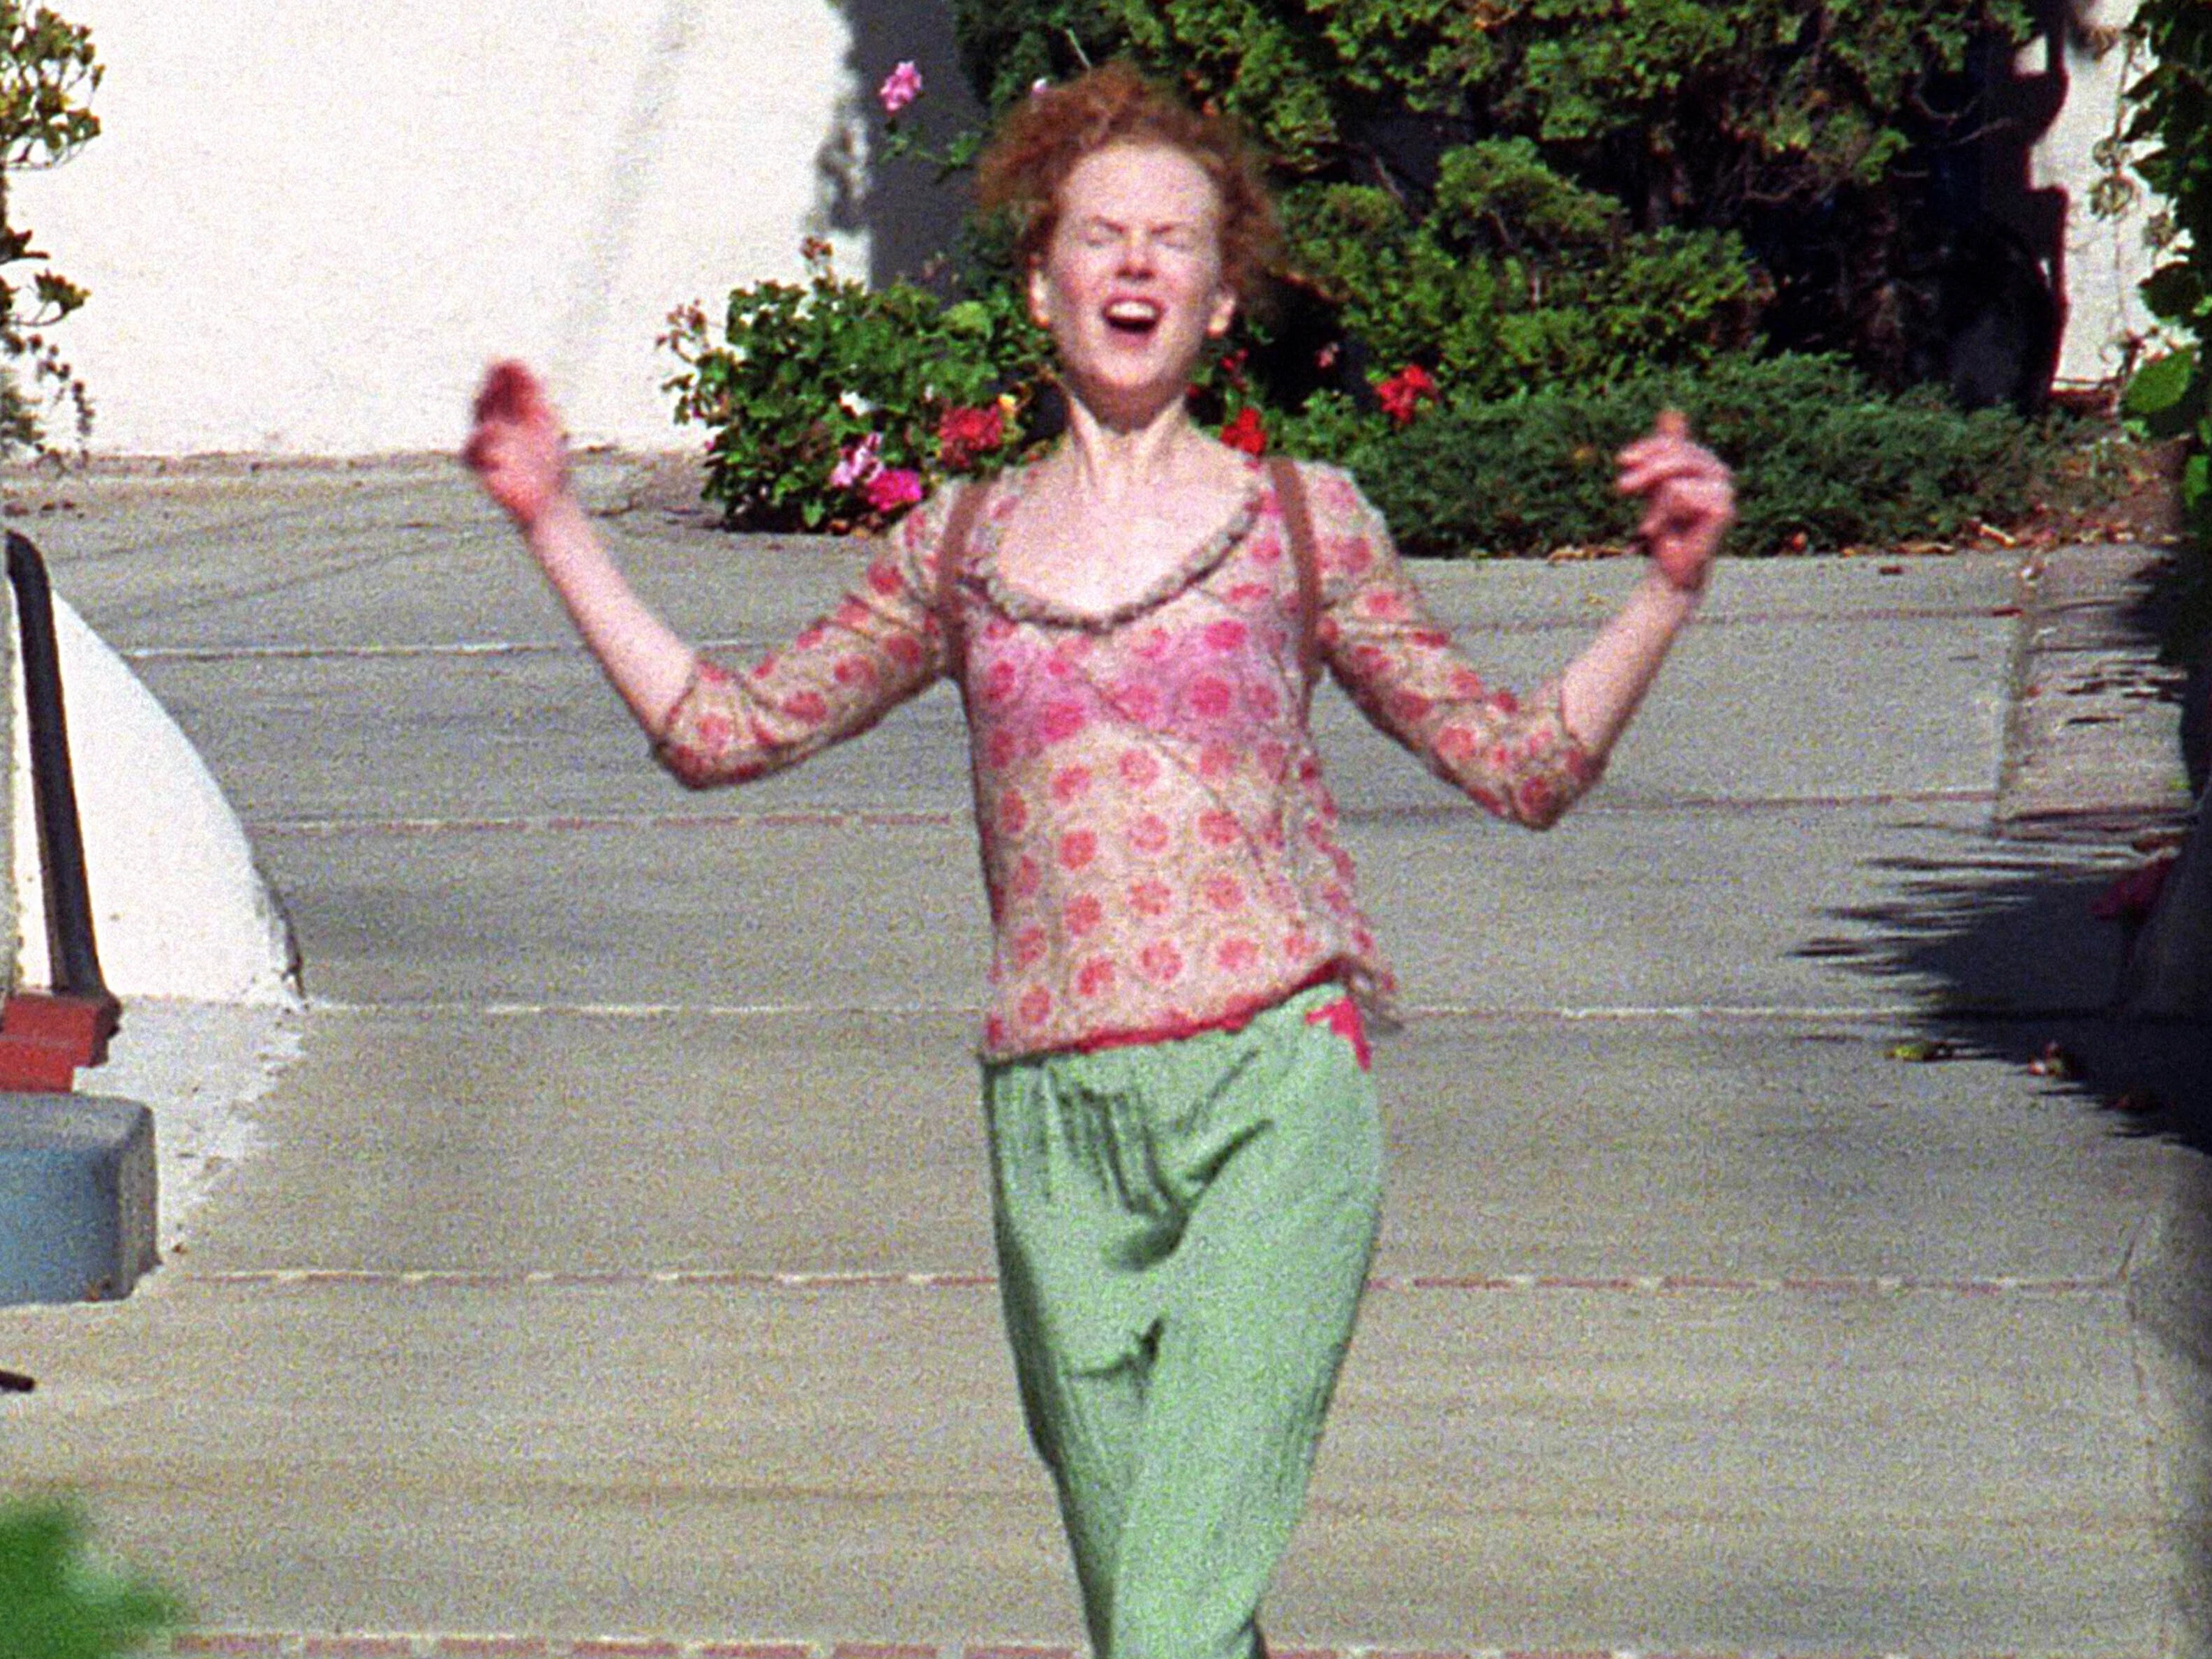 Woman recreates Nicole Kidman’s iconic 2001 photograph to celebrate her